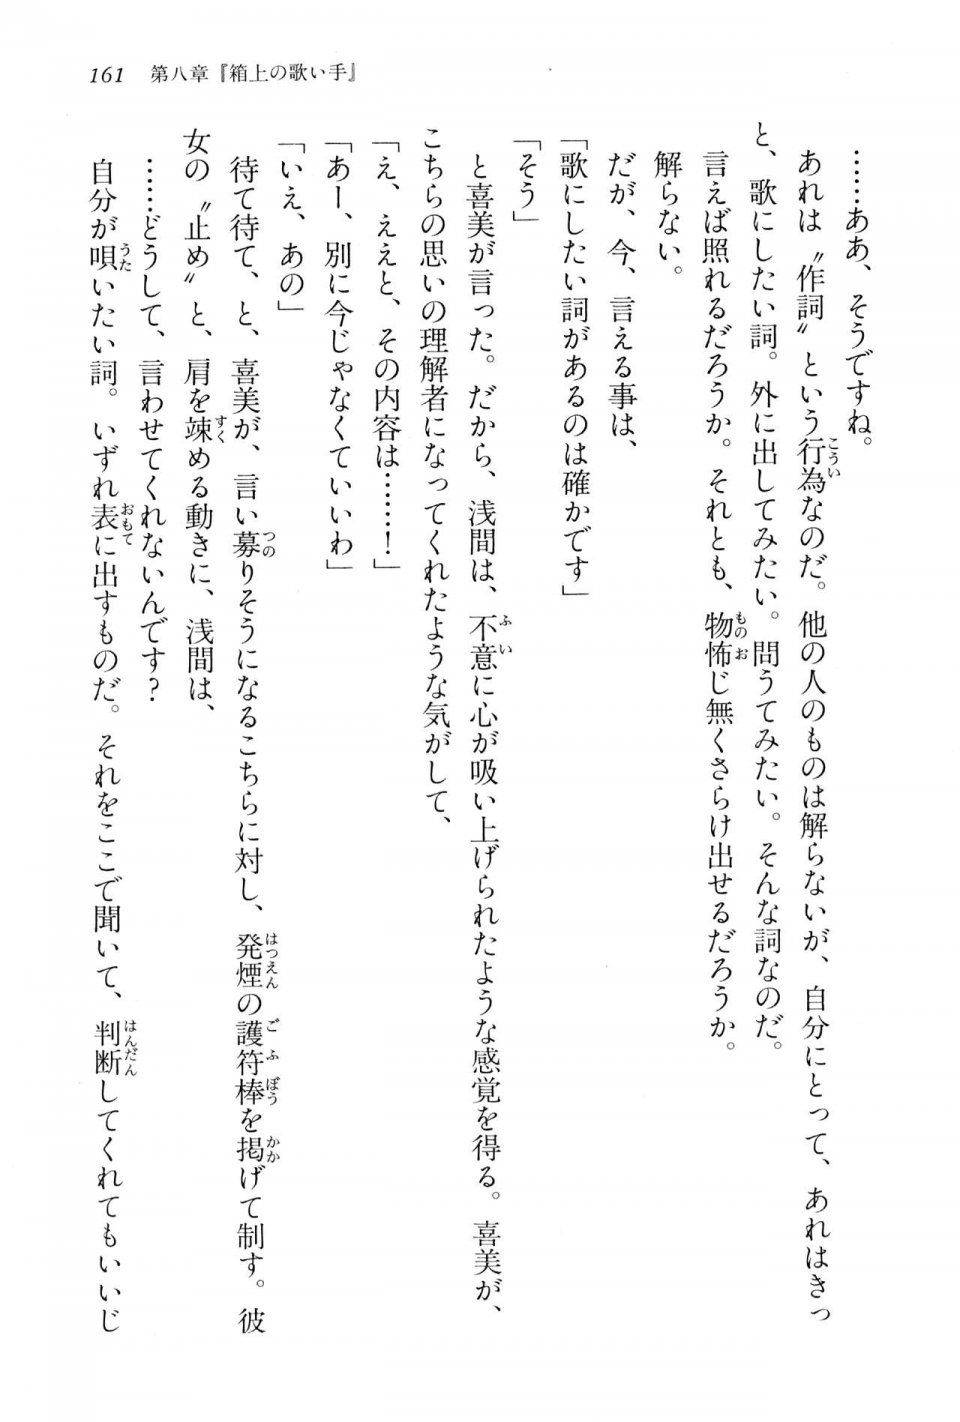 Kyoukai Senjou no Horizon BD Special Mininovel Vol 2(1B) - Photo #165